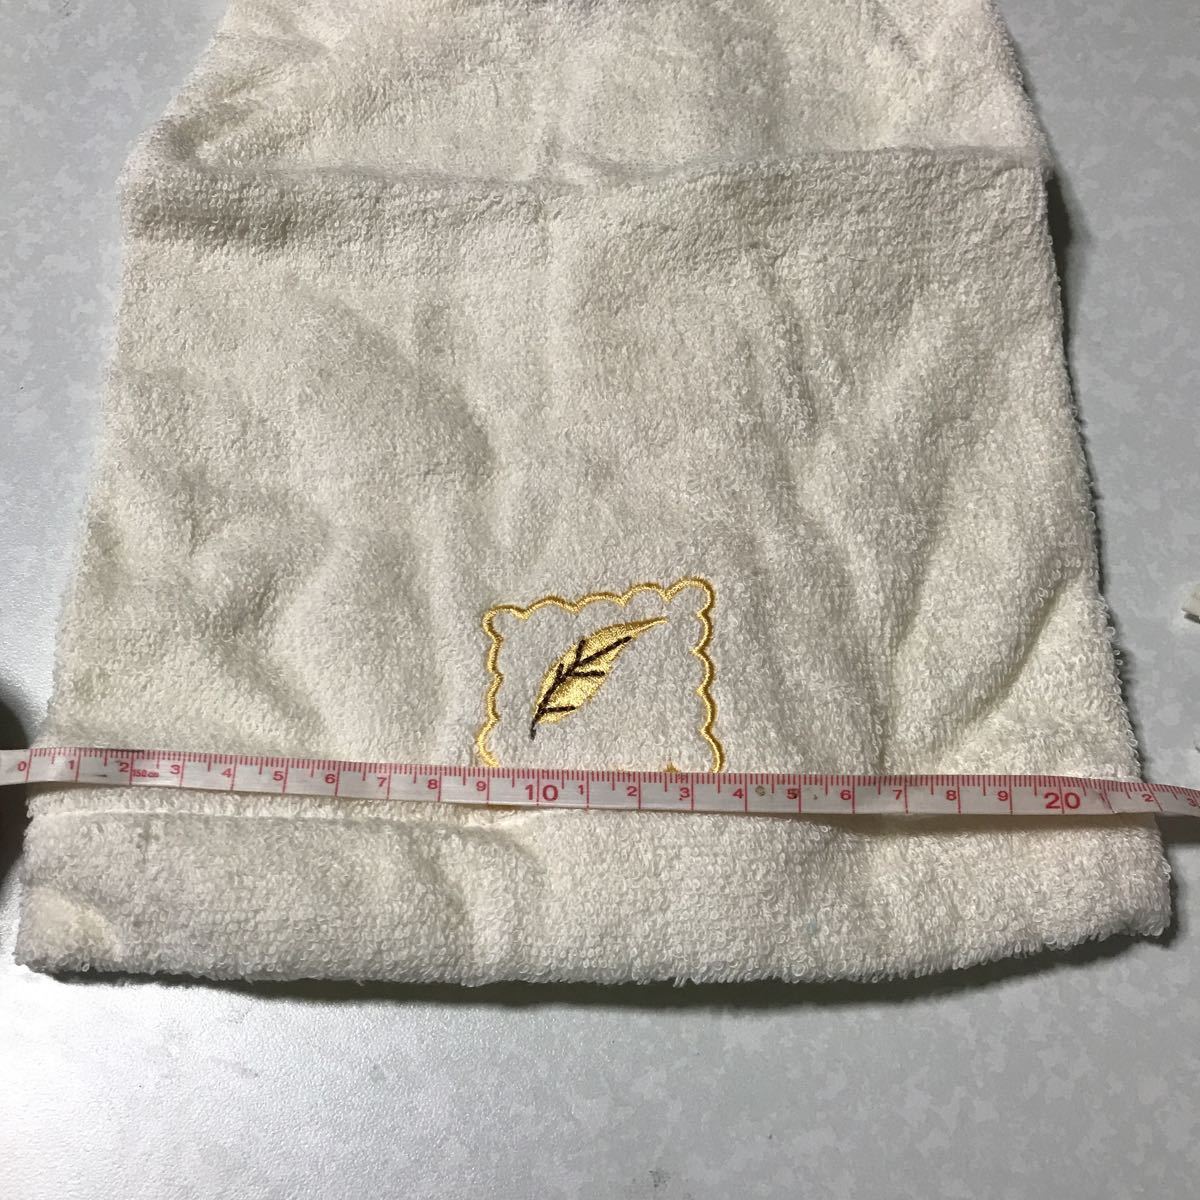 ( free shipping ) dry cap ... hat towel bath tool pool tool ... towel 